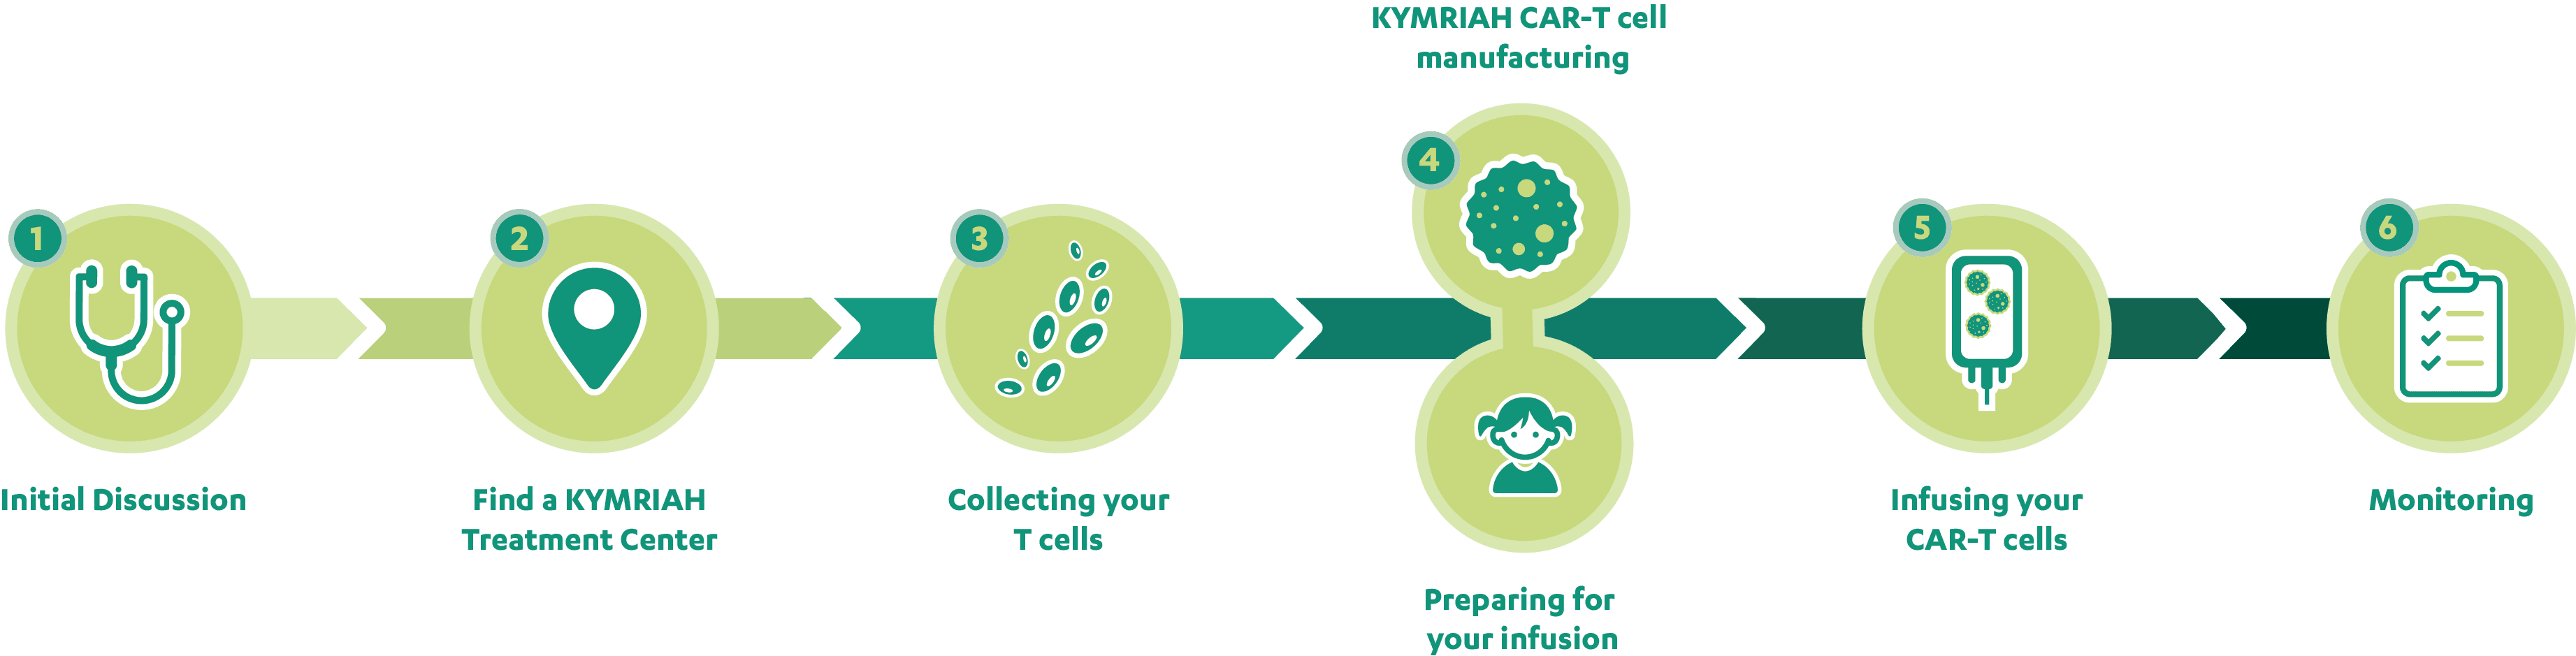 KYMRIAH treatment process